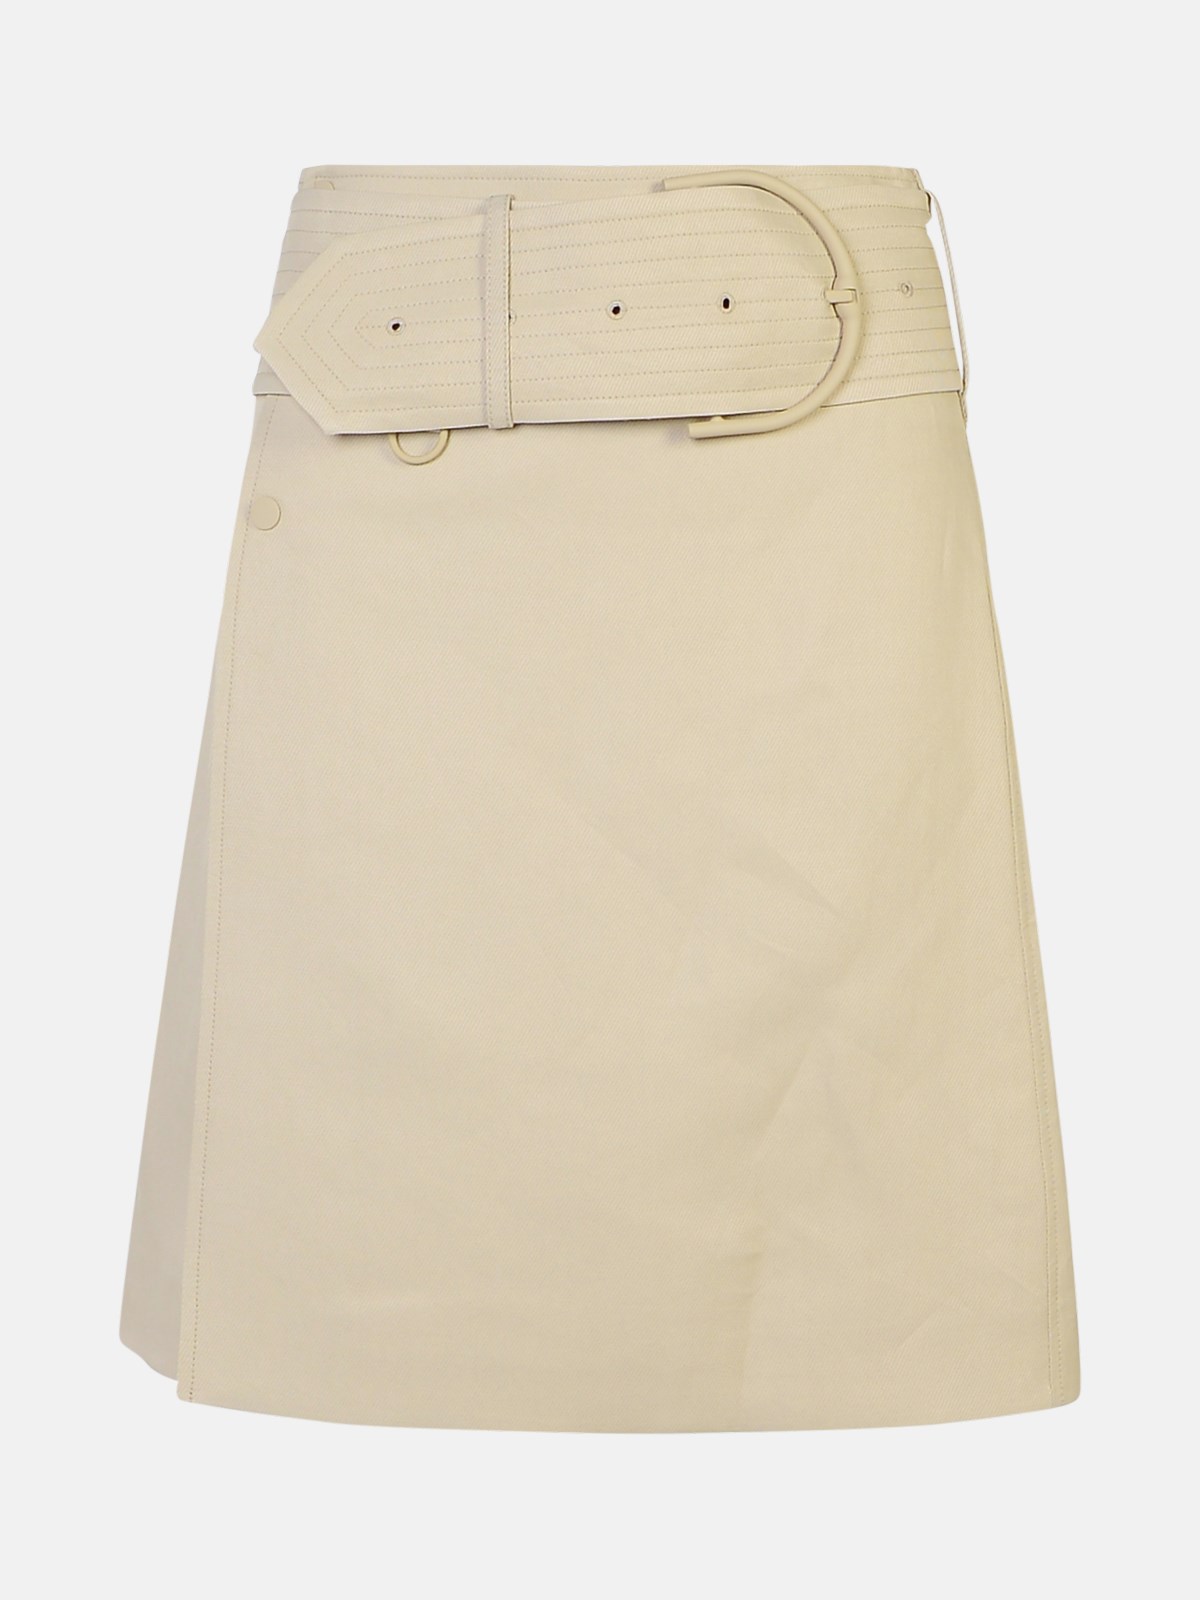 Burberry '' 'midi' Beige Miniskirt